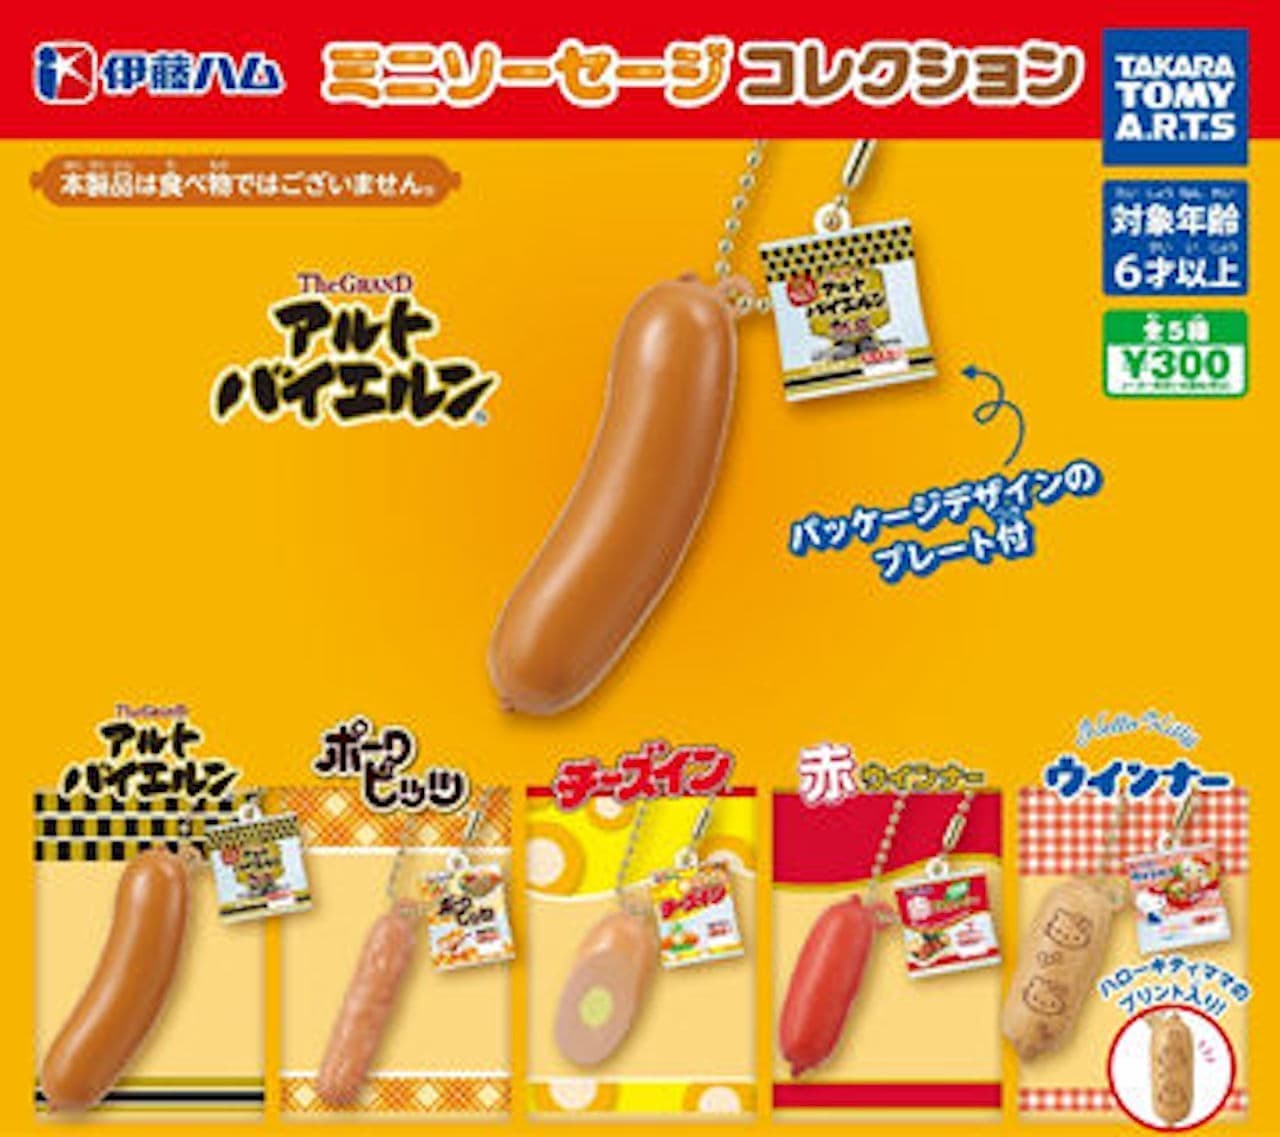 Itoham Mini Sausage Collection" from Takara Tomy Arts